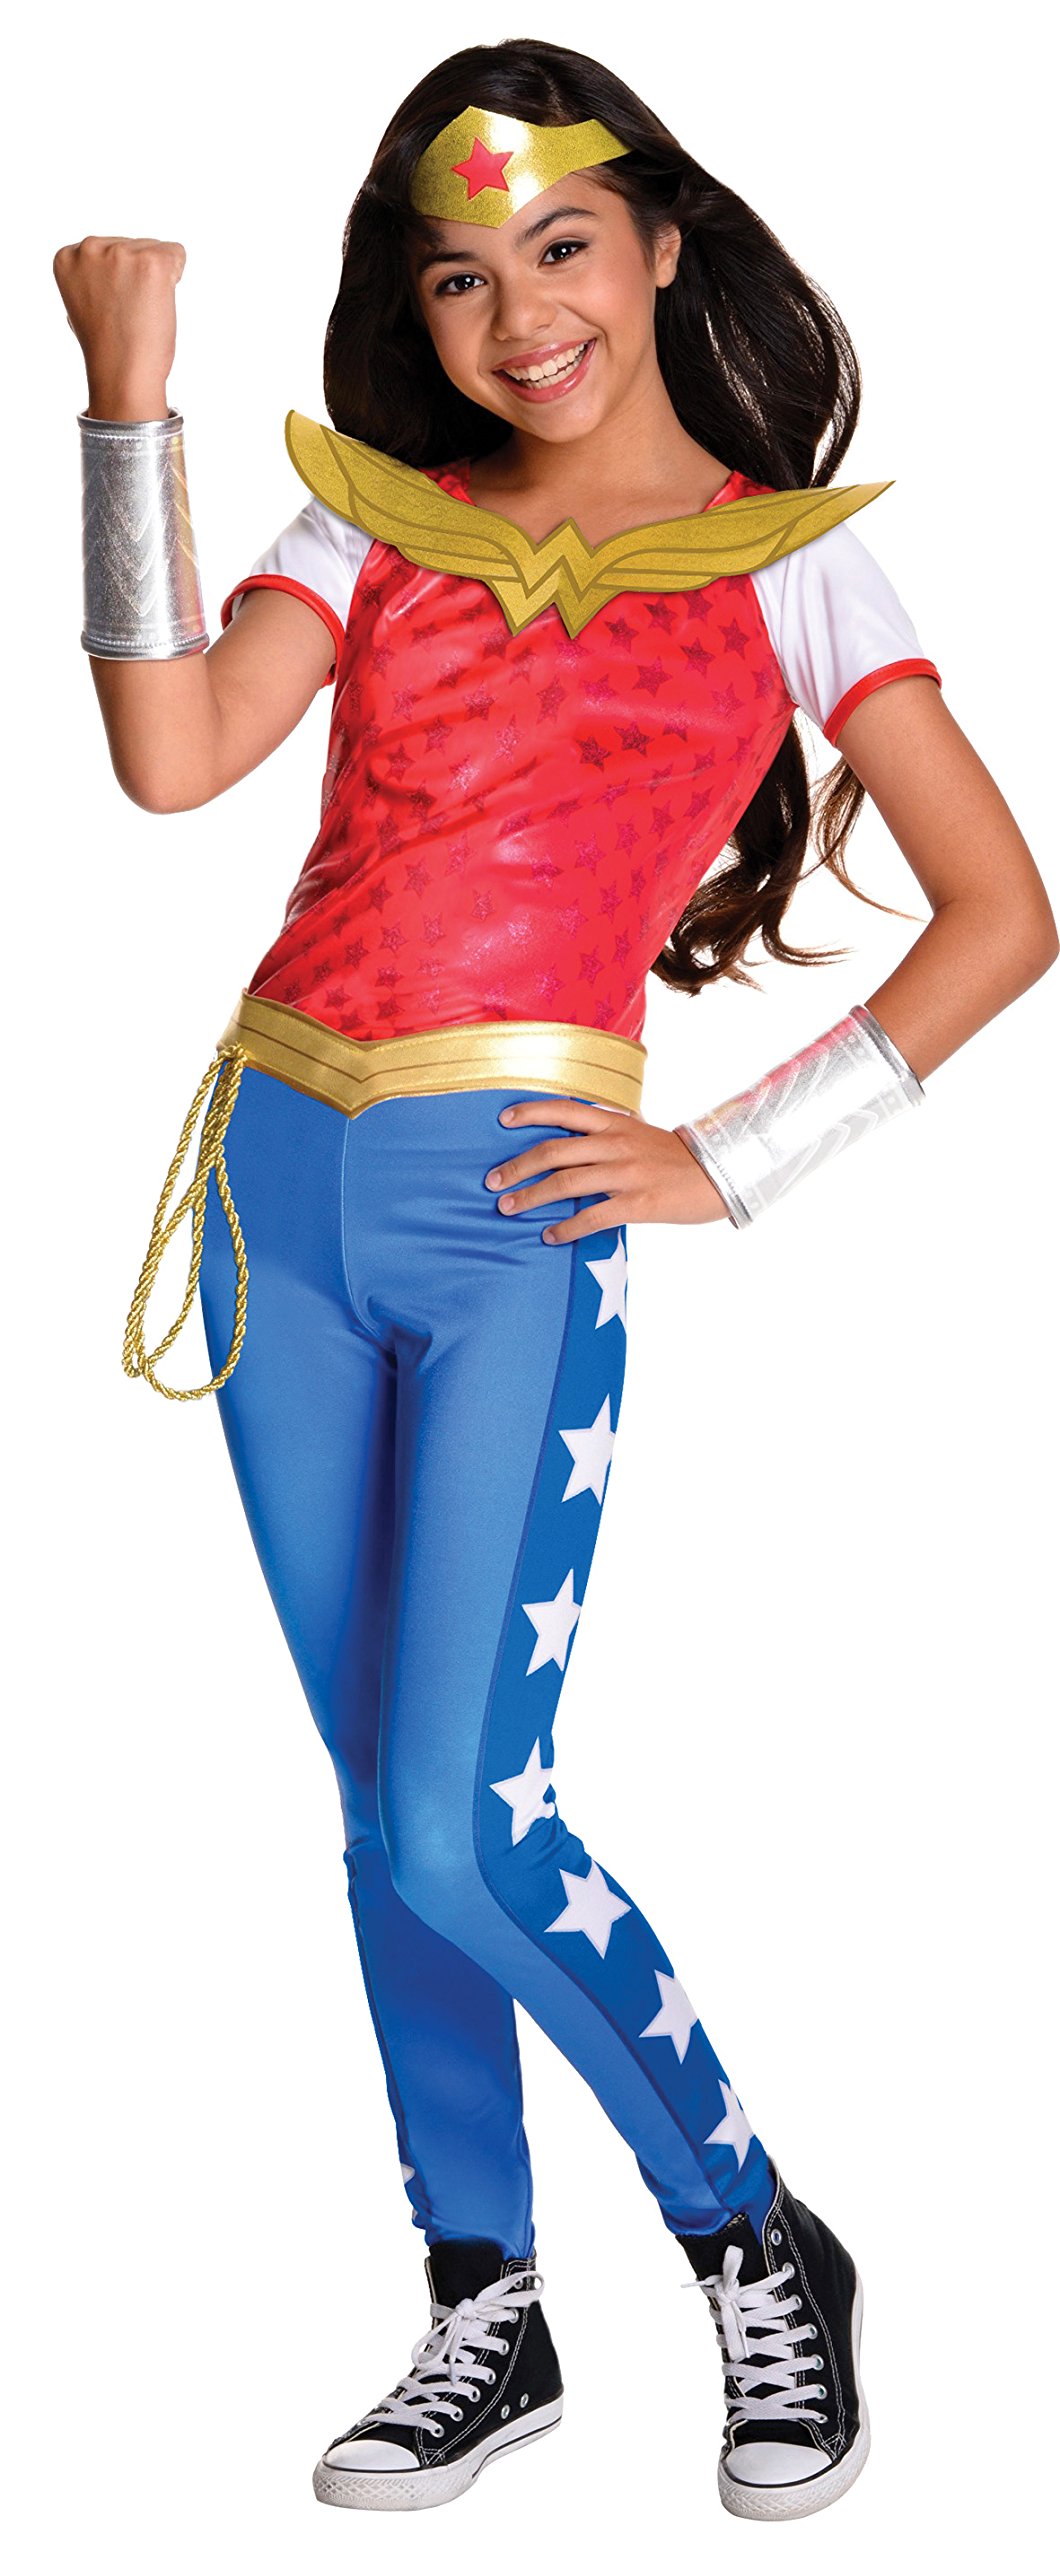 Rubie's Costume Kids DC Superhero Girls Deluxe Wonder Woman Costume Red/Blue, Small